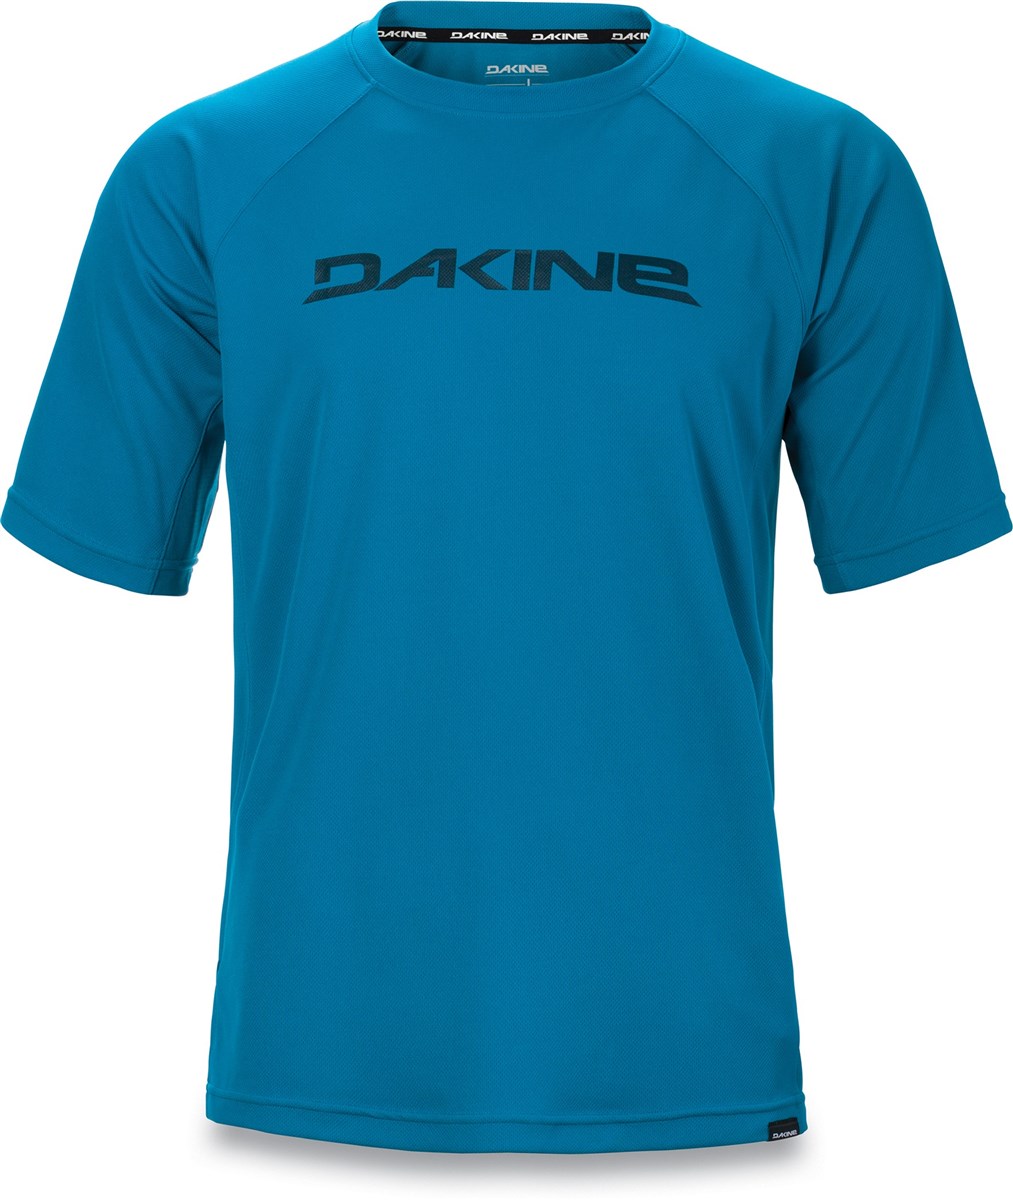 Dakine Rail Short Sleeve Jersey SS17